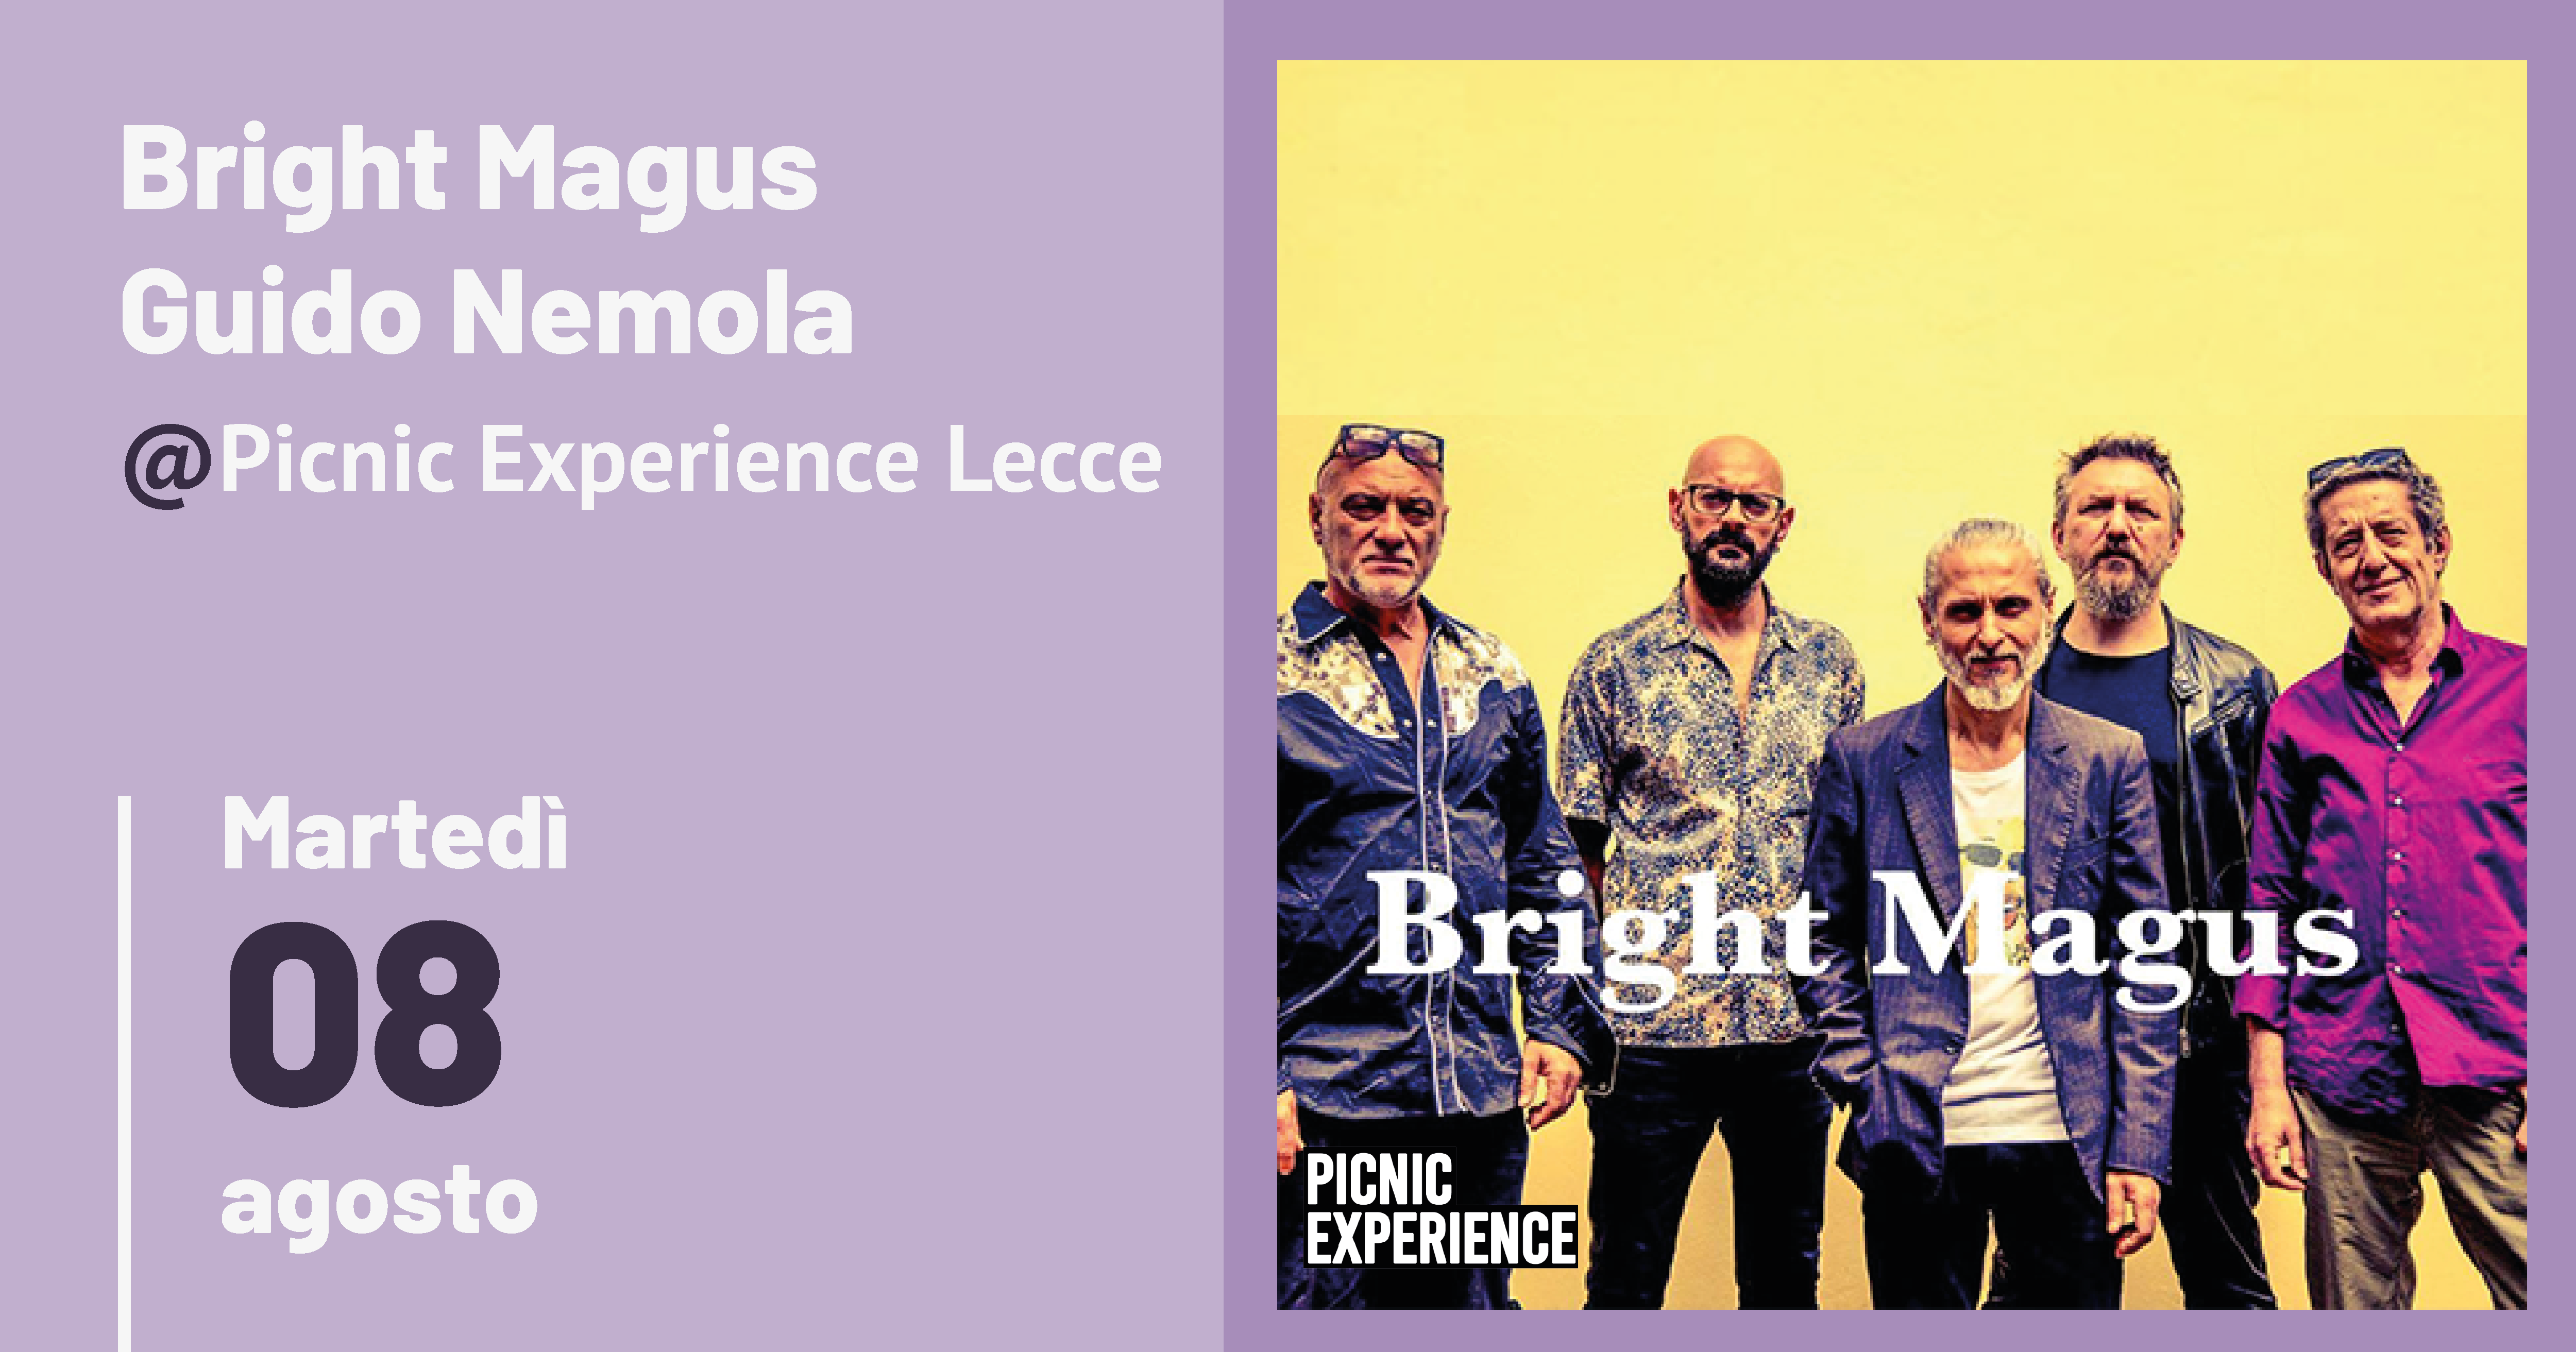 Picnic Experience at Rudiae Amphiteatre / Bright Magus & Guido Nemola - Página frontal